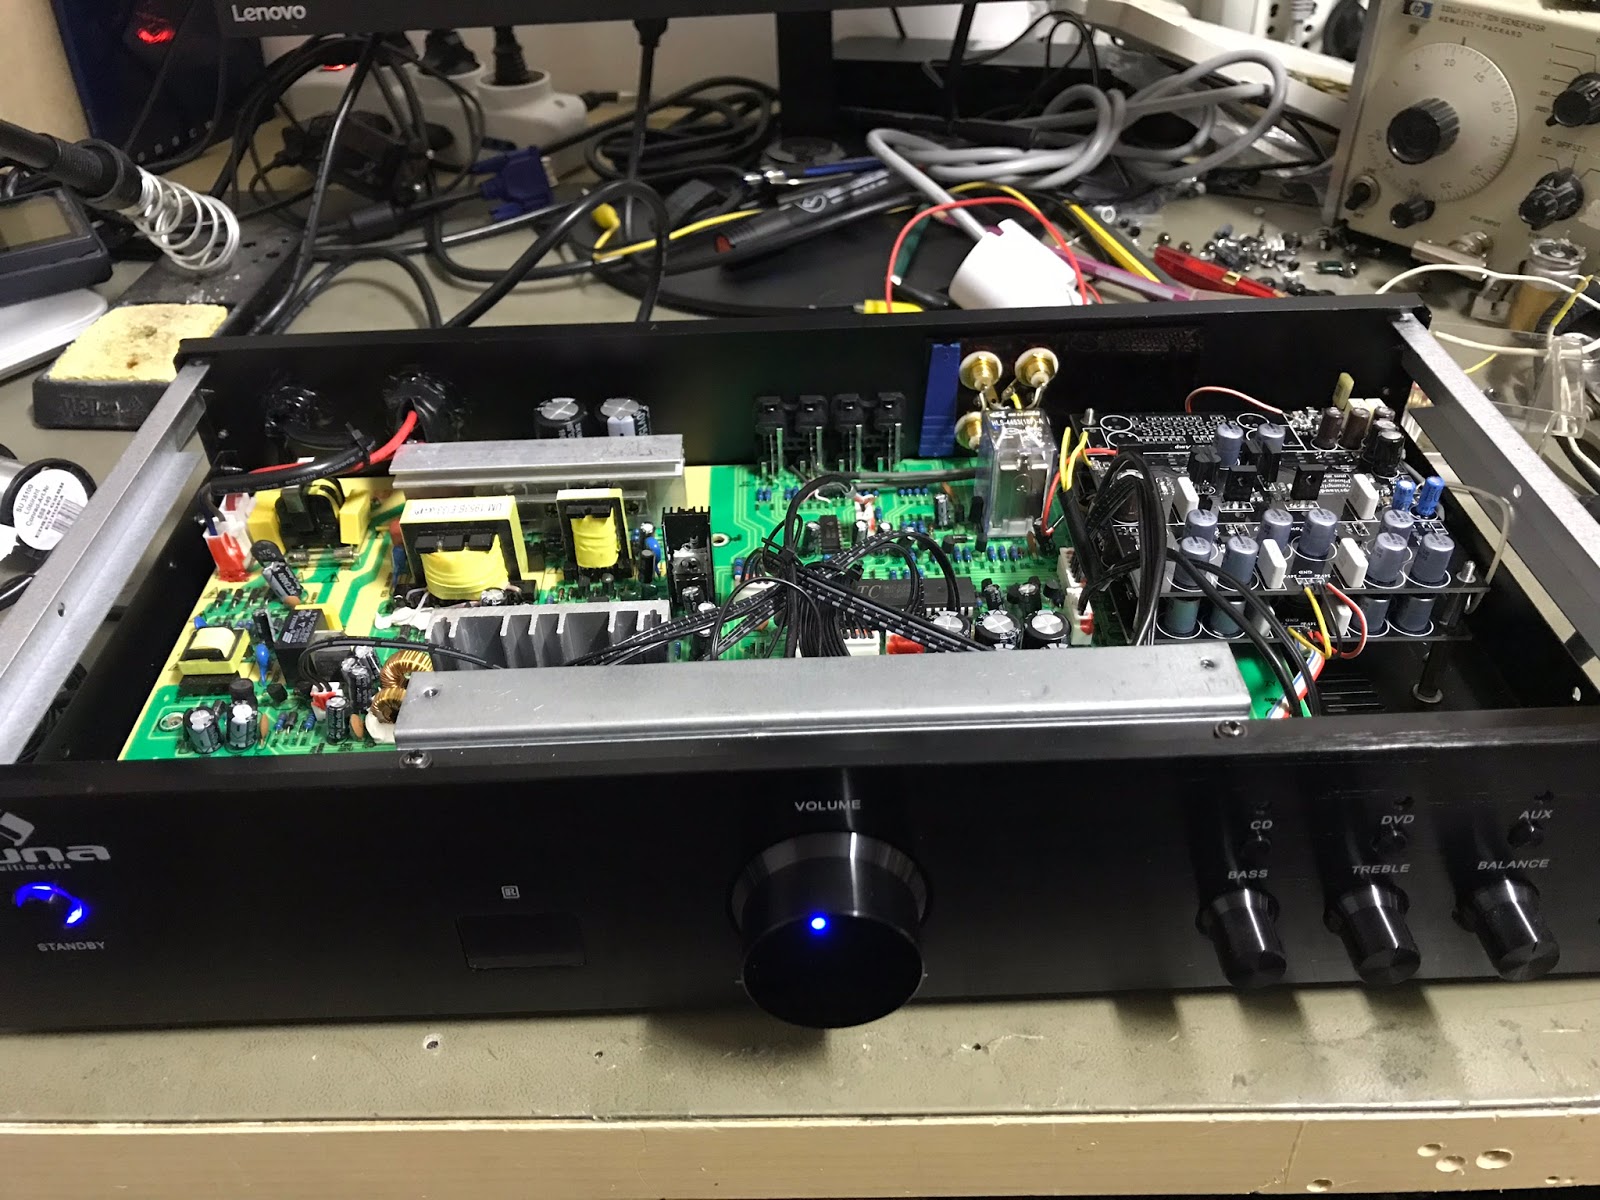 Review] Auna AV 2 CD508 - integrated amplifier - [English]